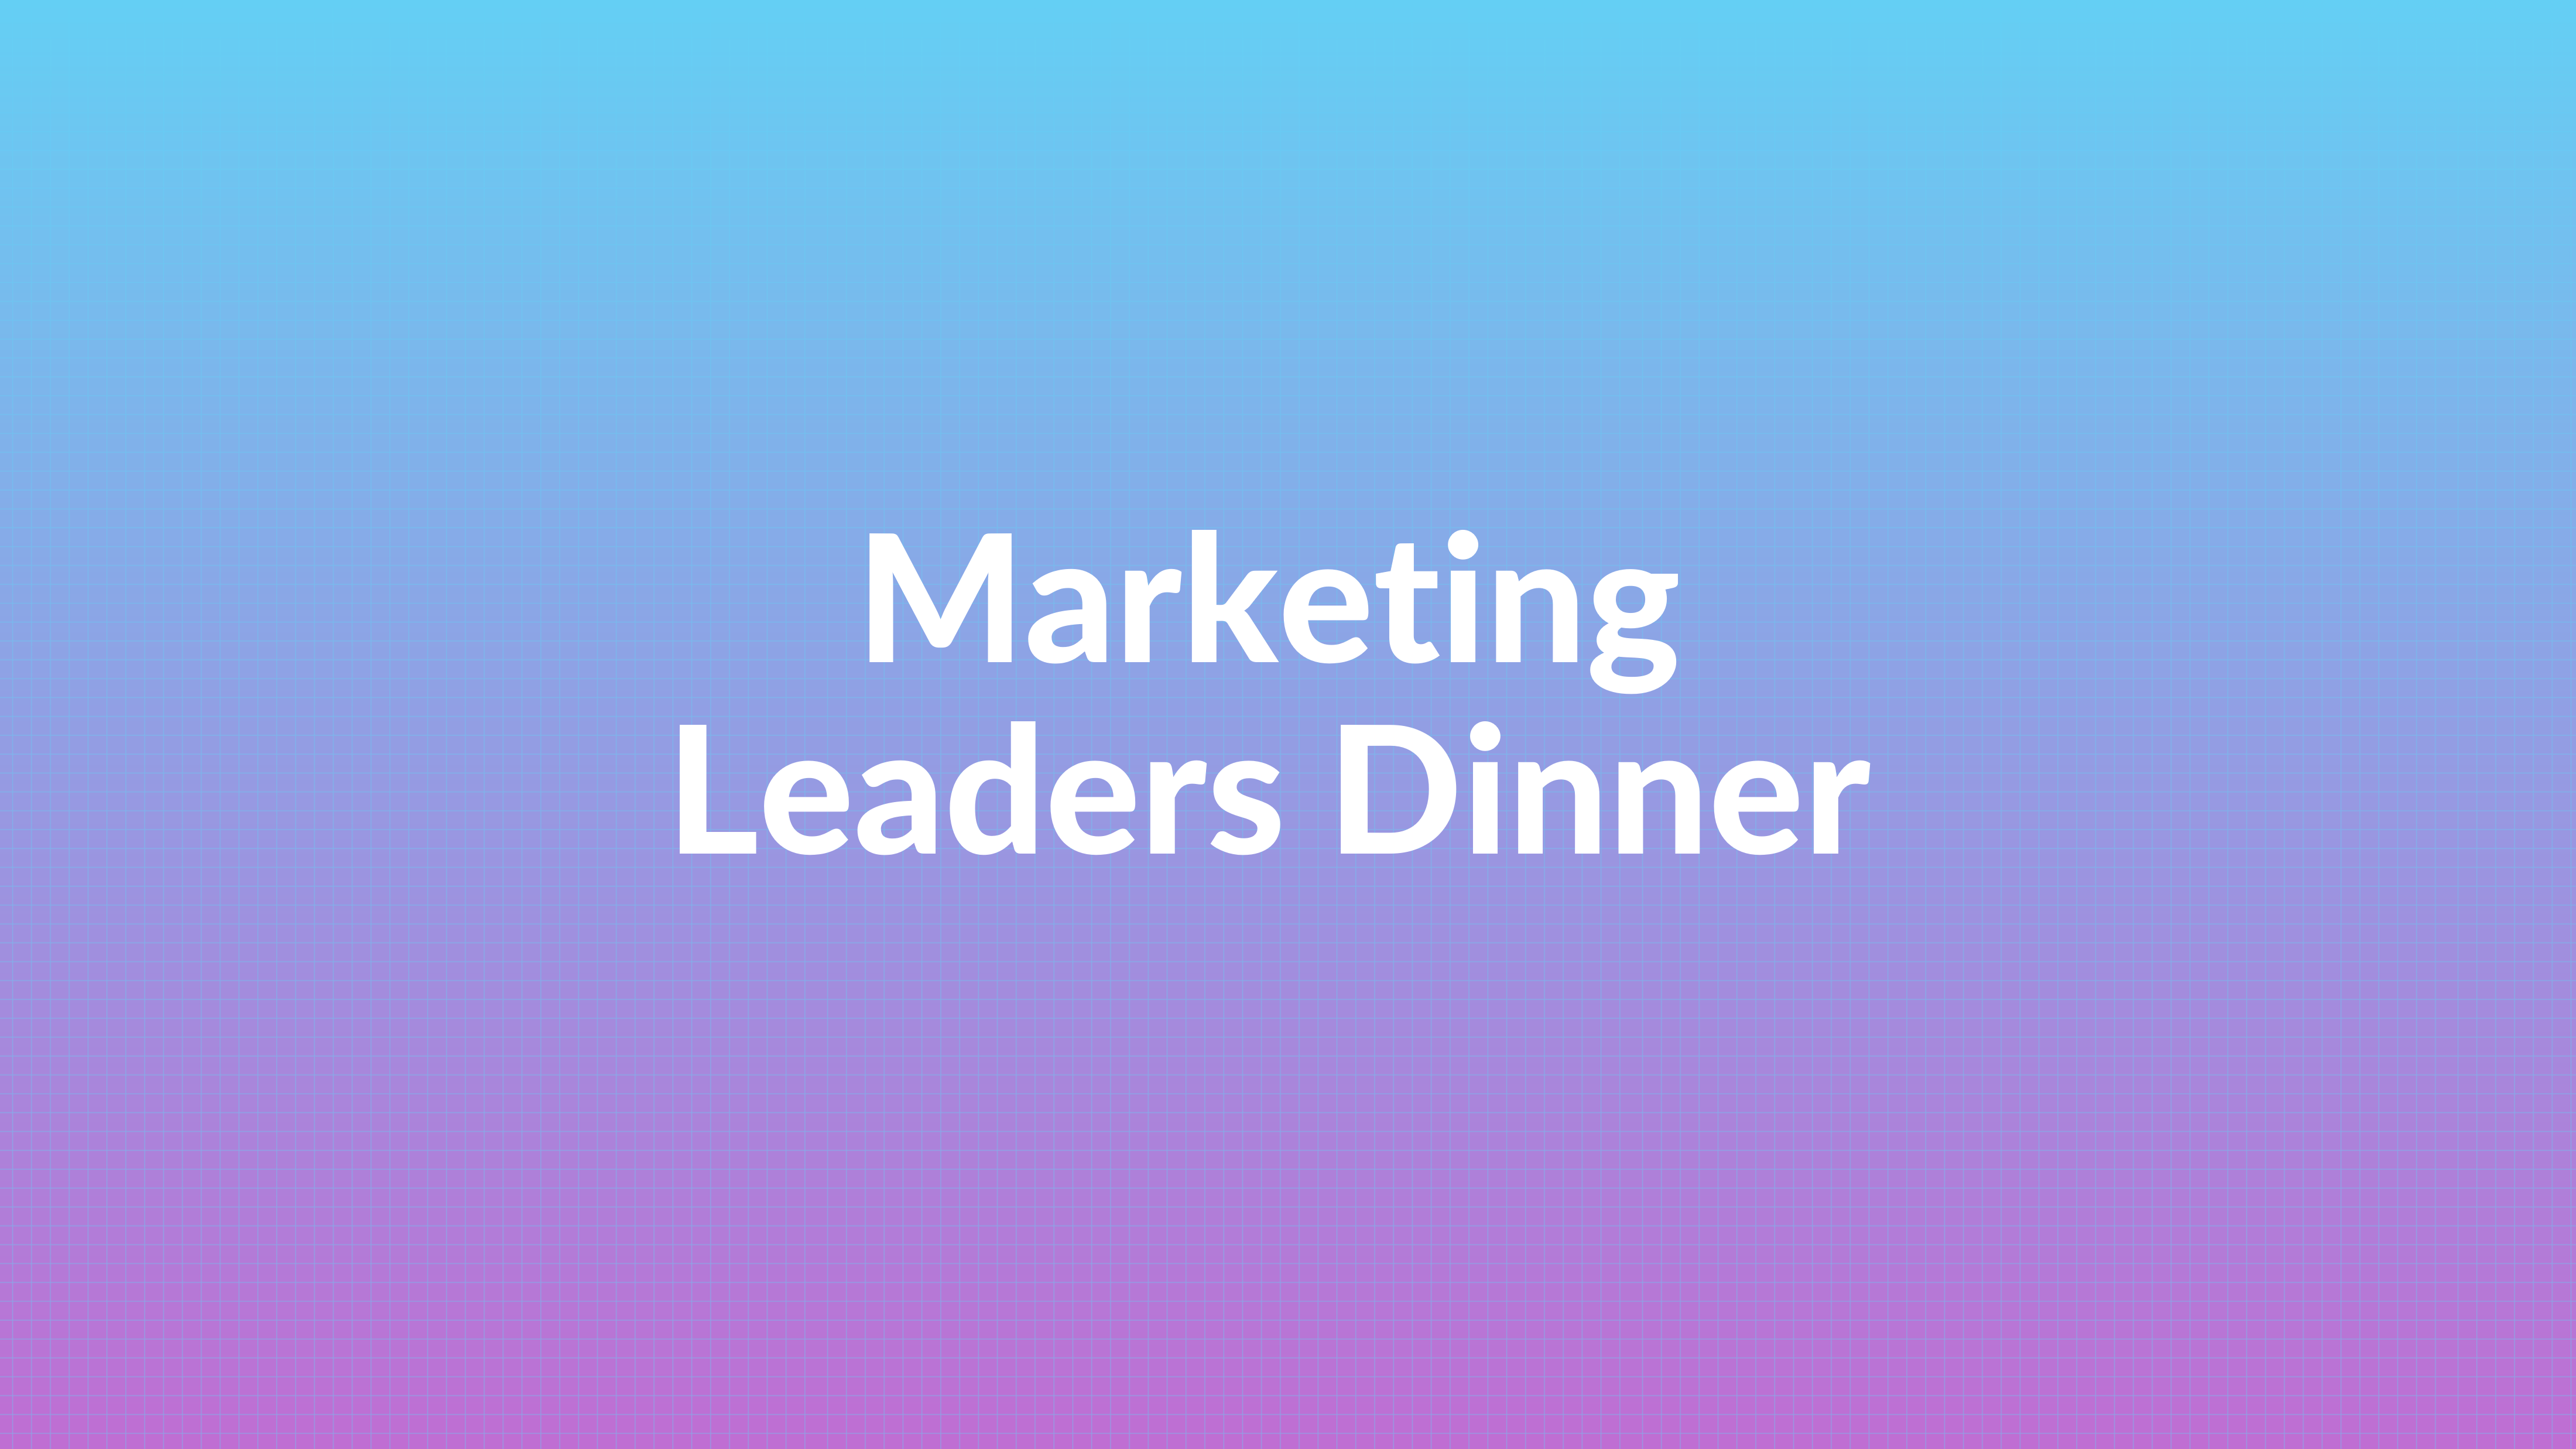 Marketing Leaders dinner